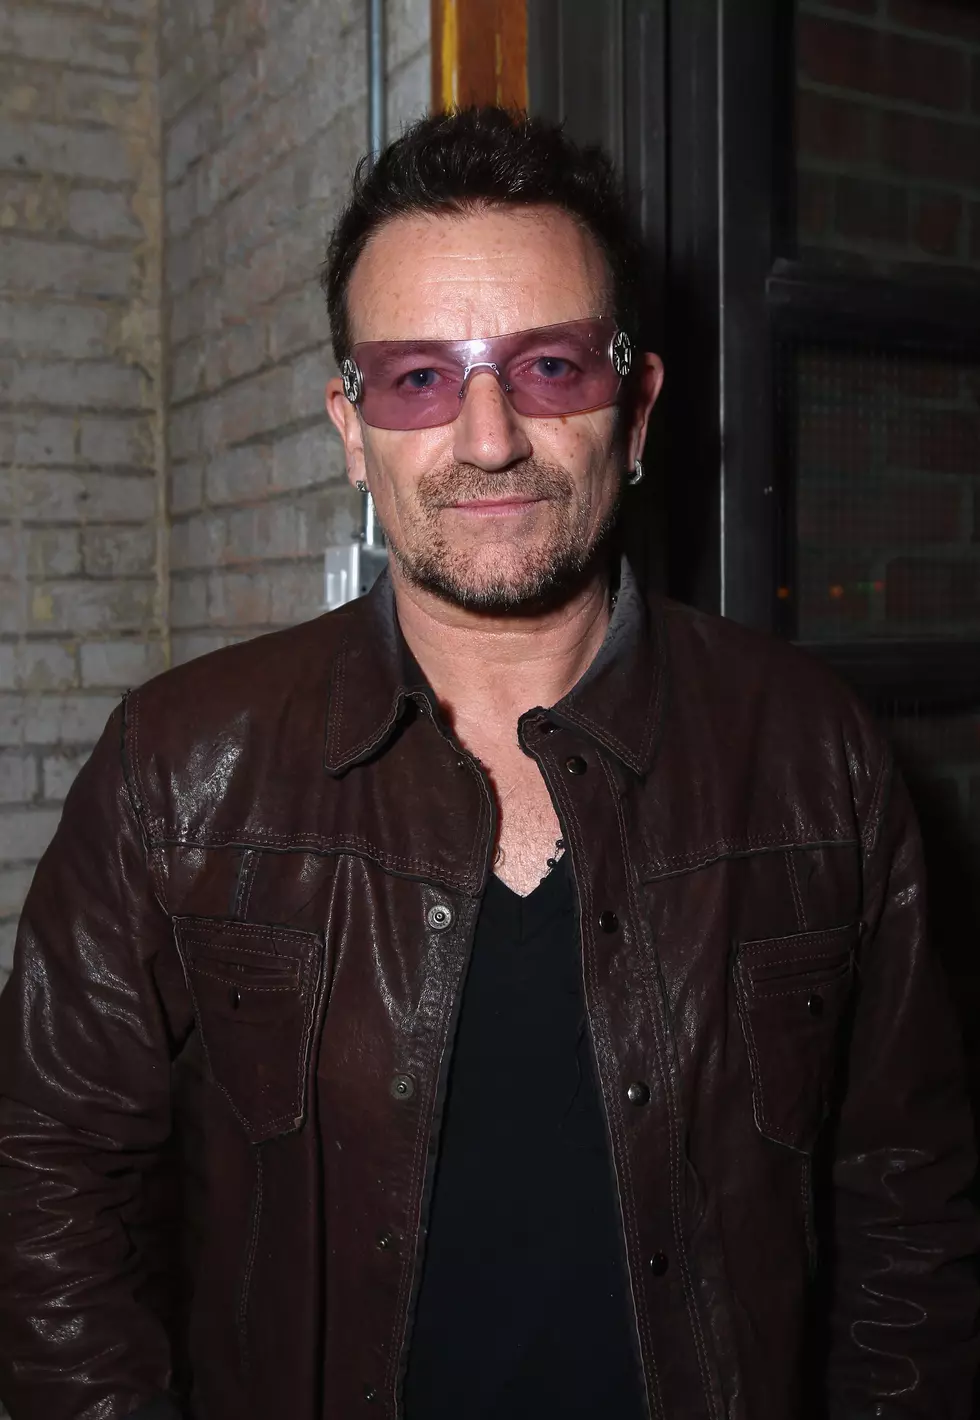 U2’s Bono Does His Bill Clinton Impersonation at The CGI2013 [VIDEO]